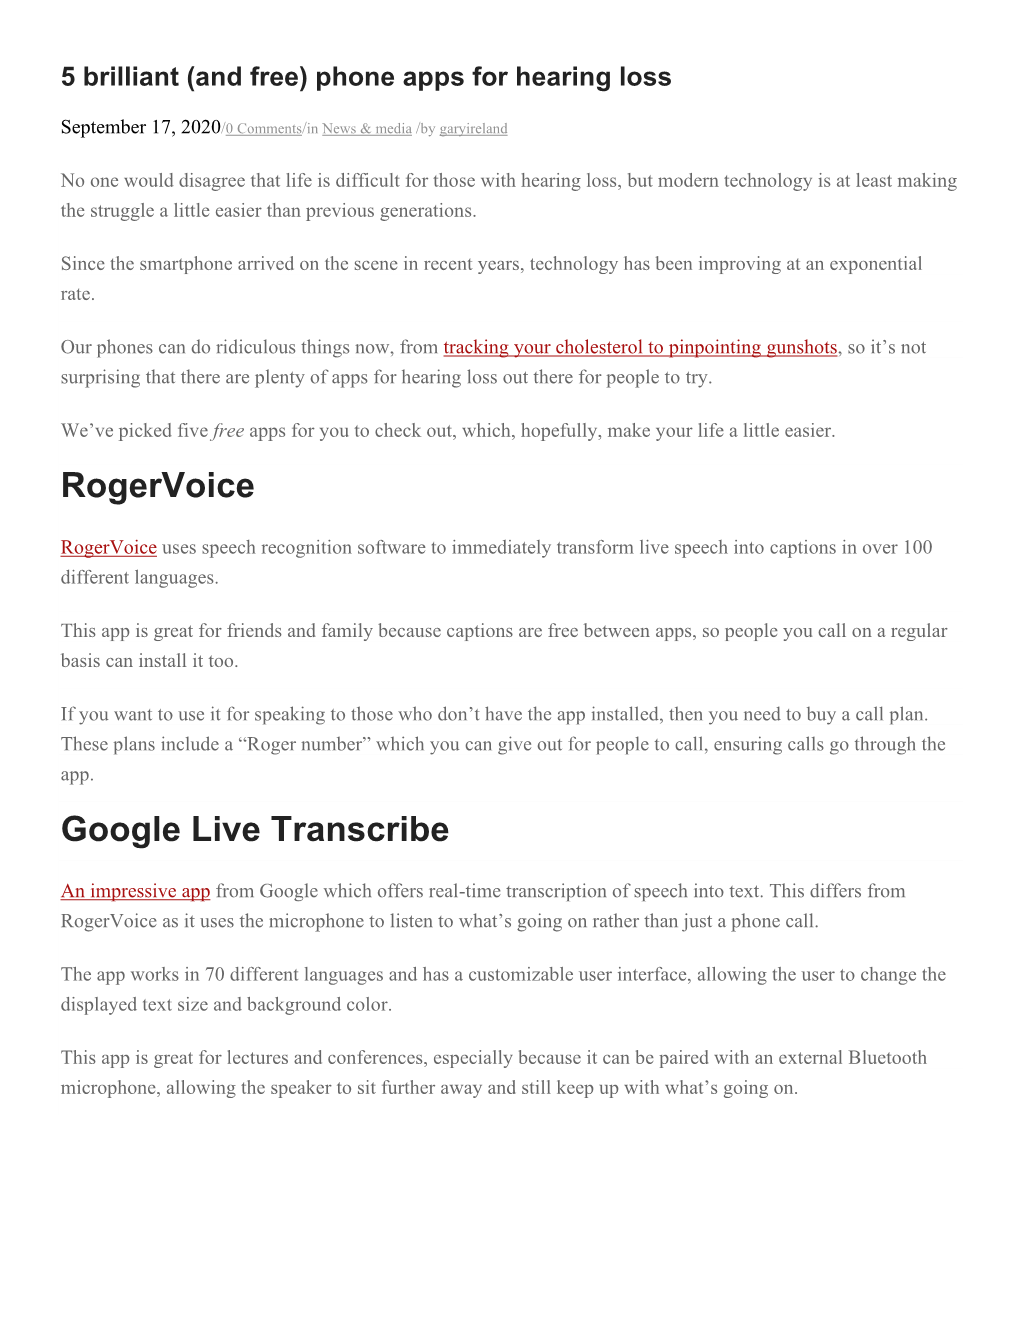 Rogervoice Google Live Transcribe